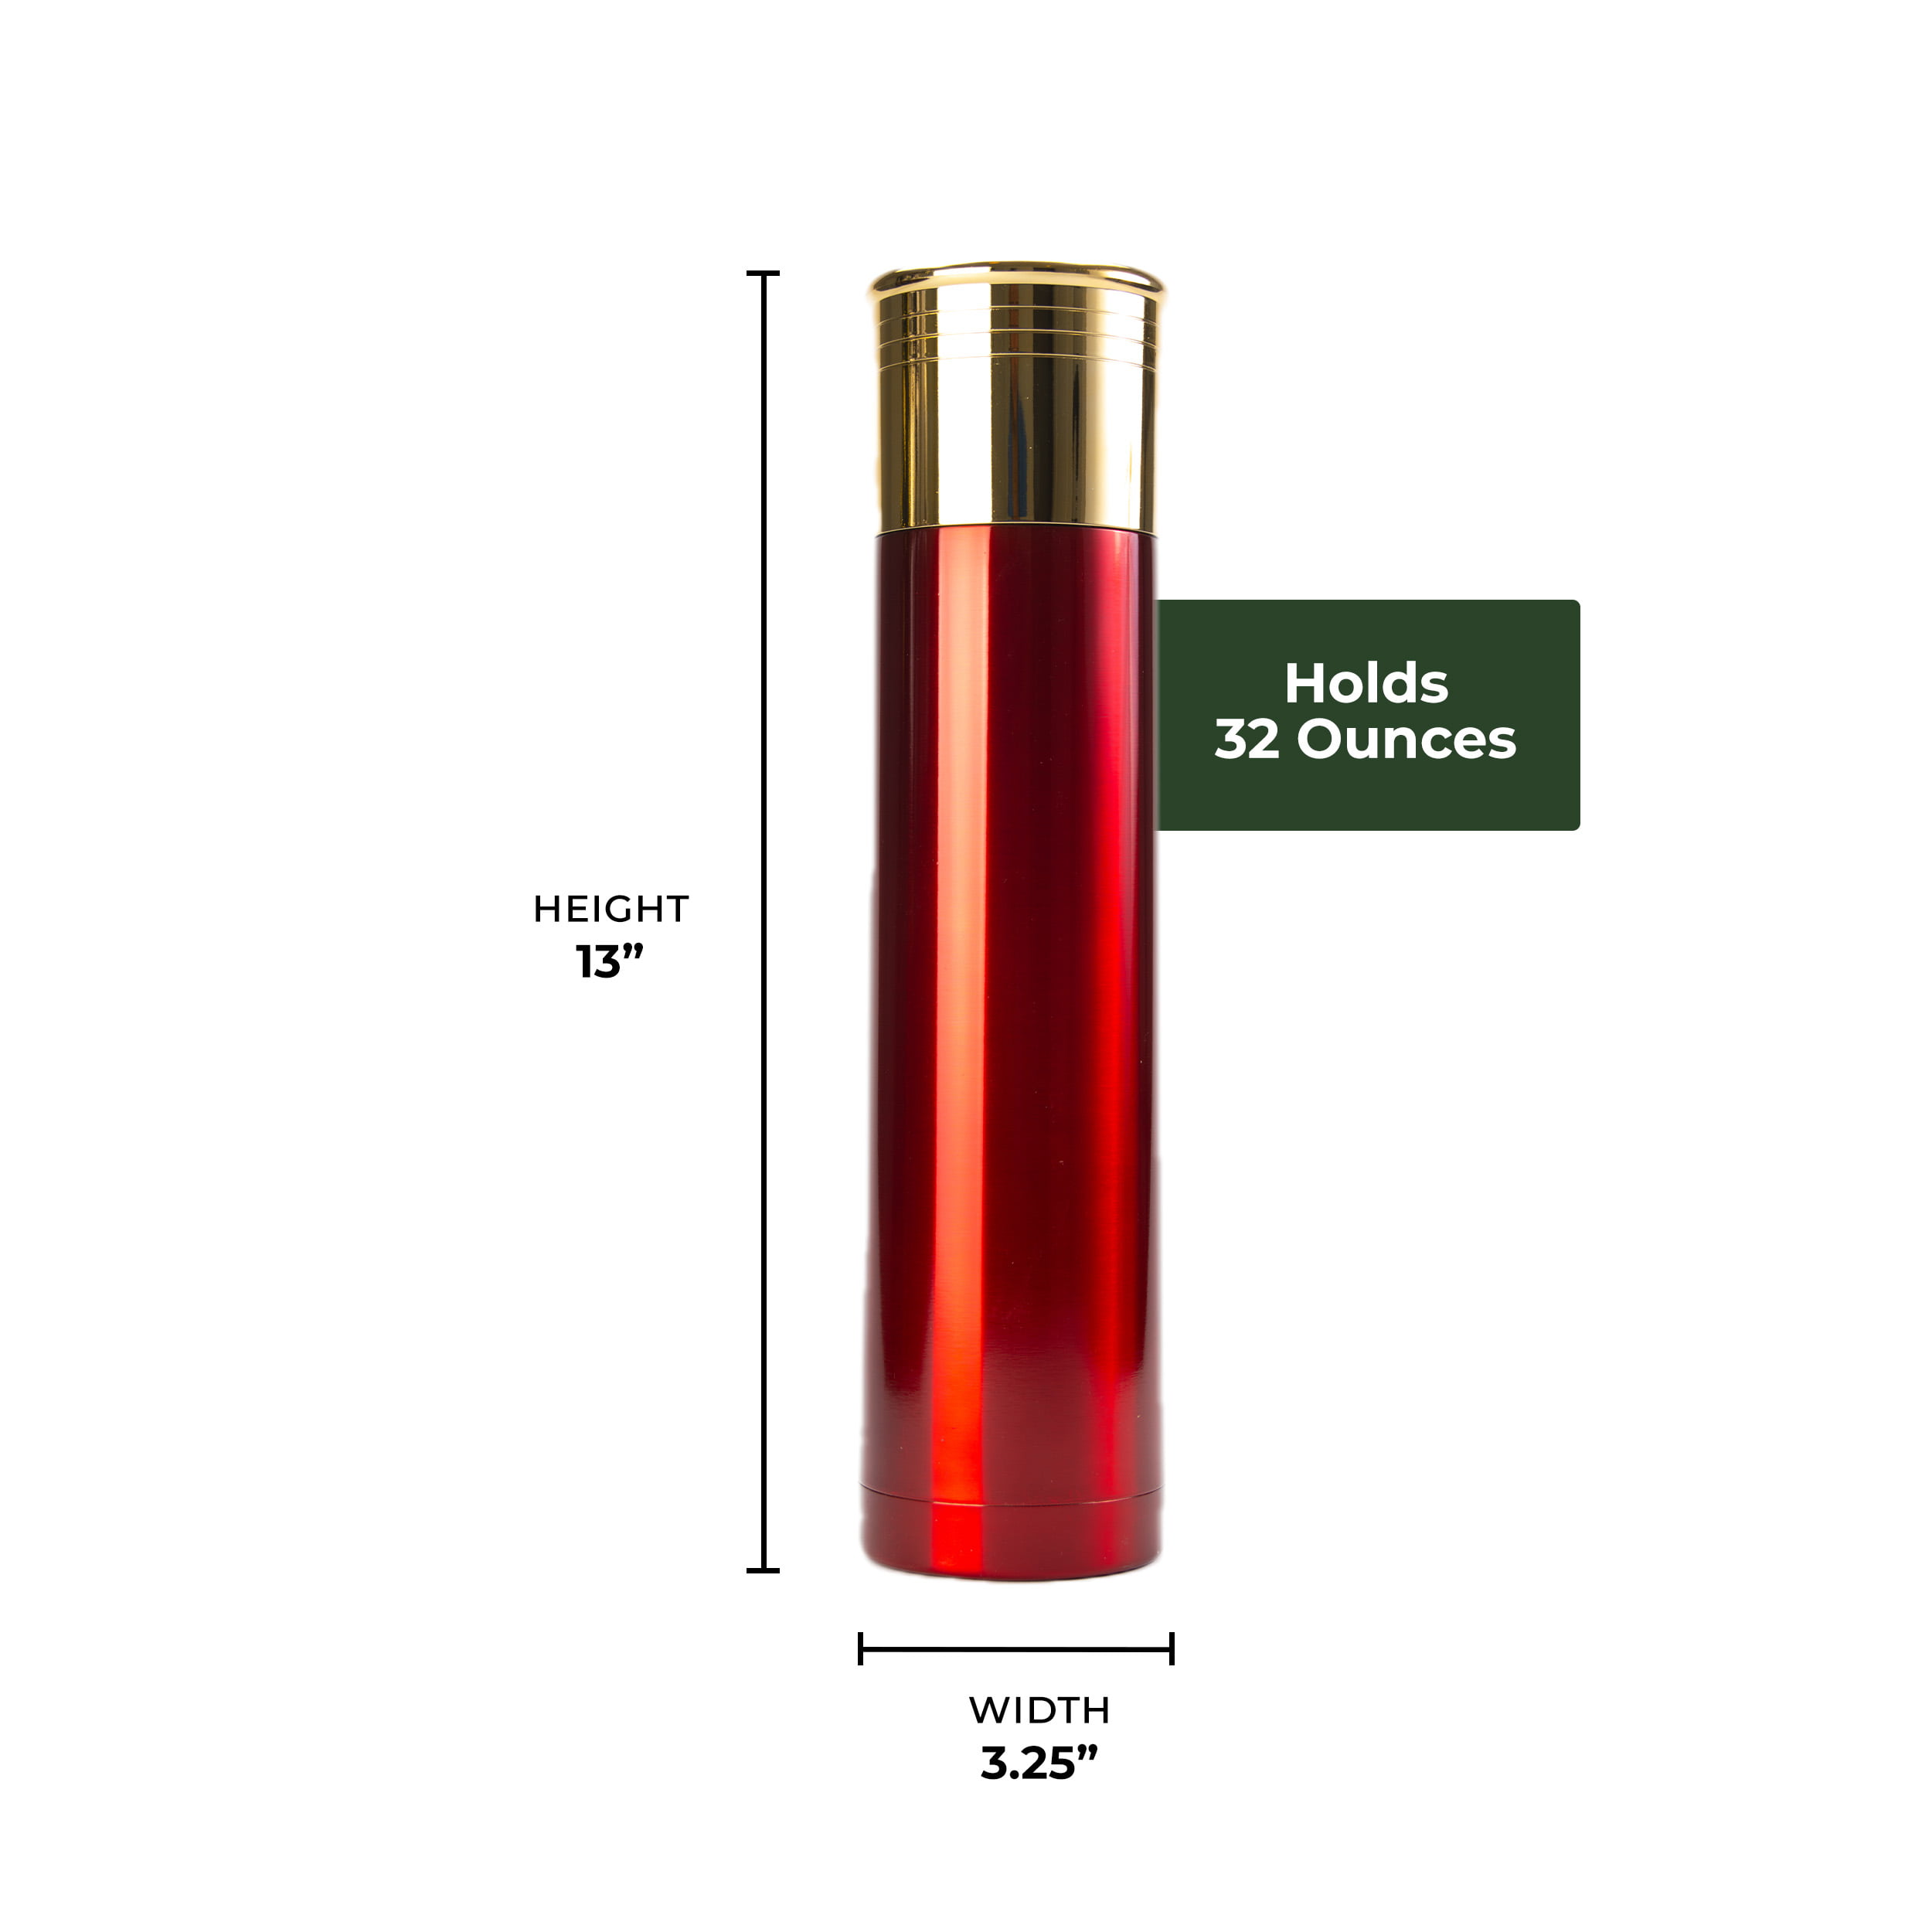 Rivers Edge Vacuum Bottle - Shotshell 1000ml Red 